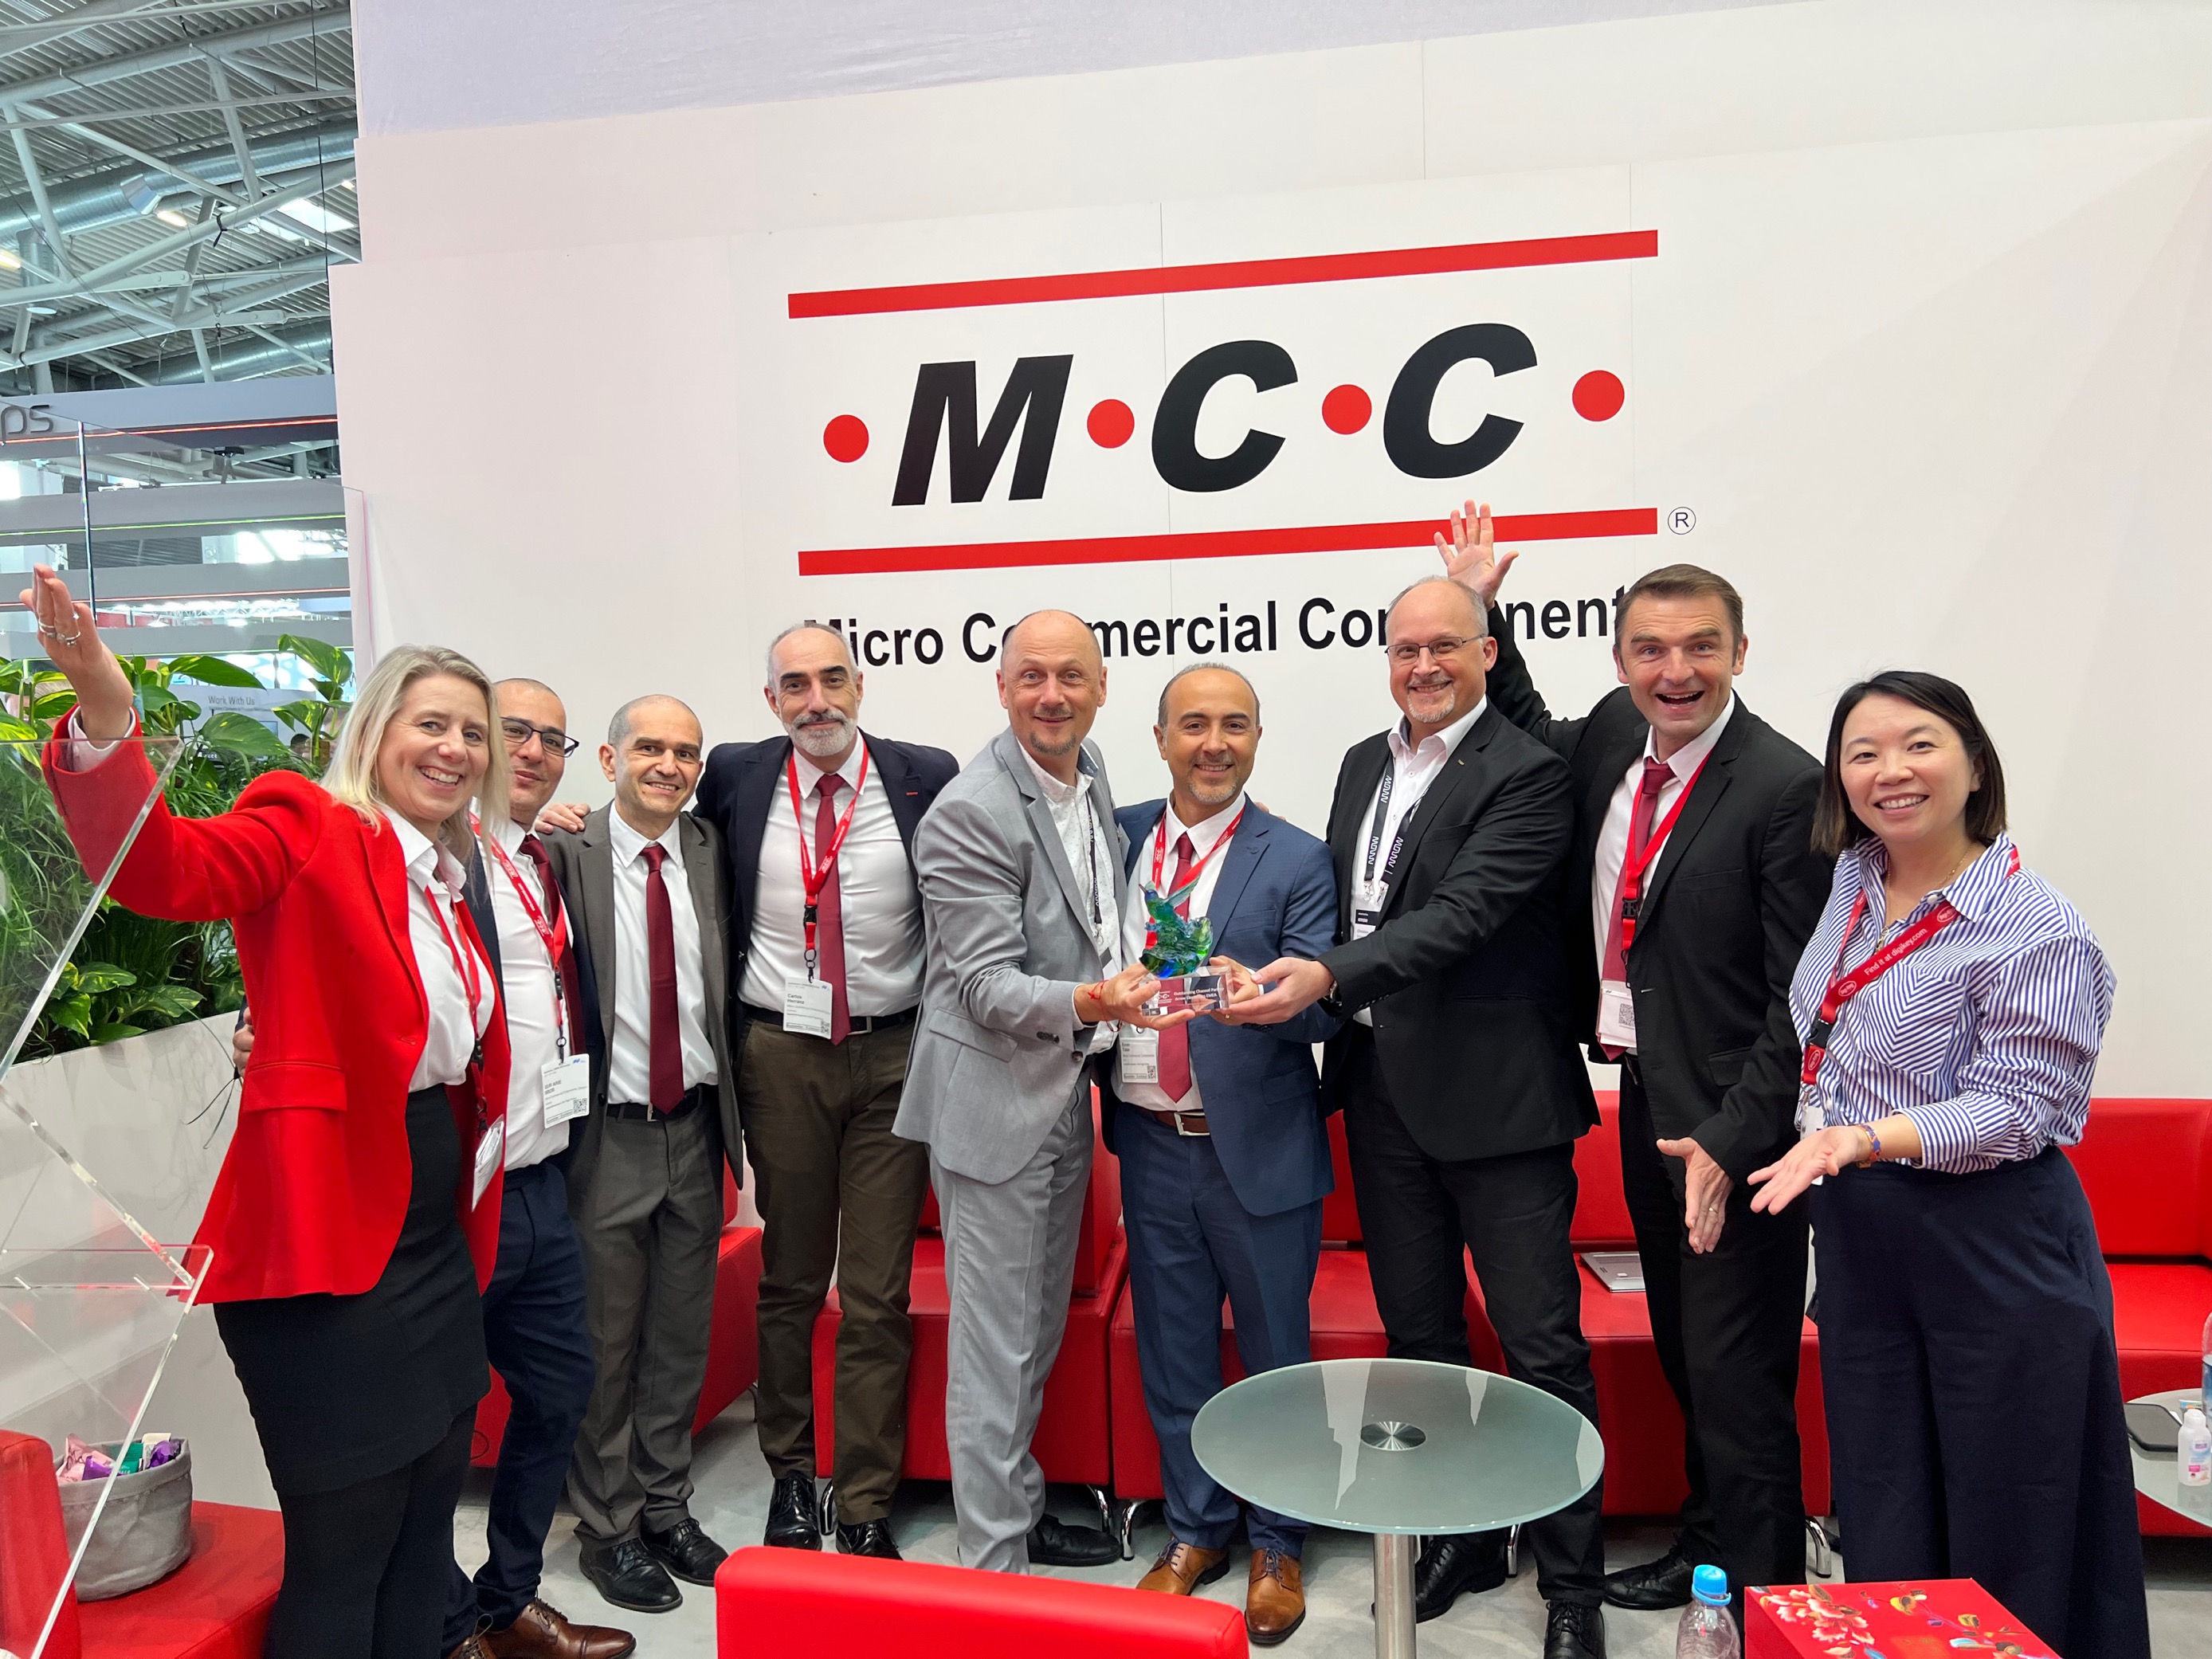 MCC Gives Arrow Electronics Partner Award for Excellence